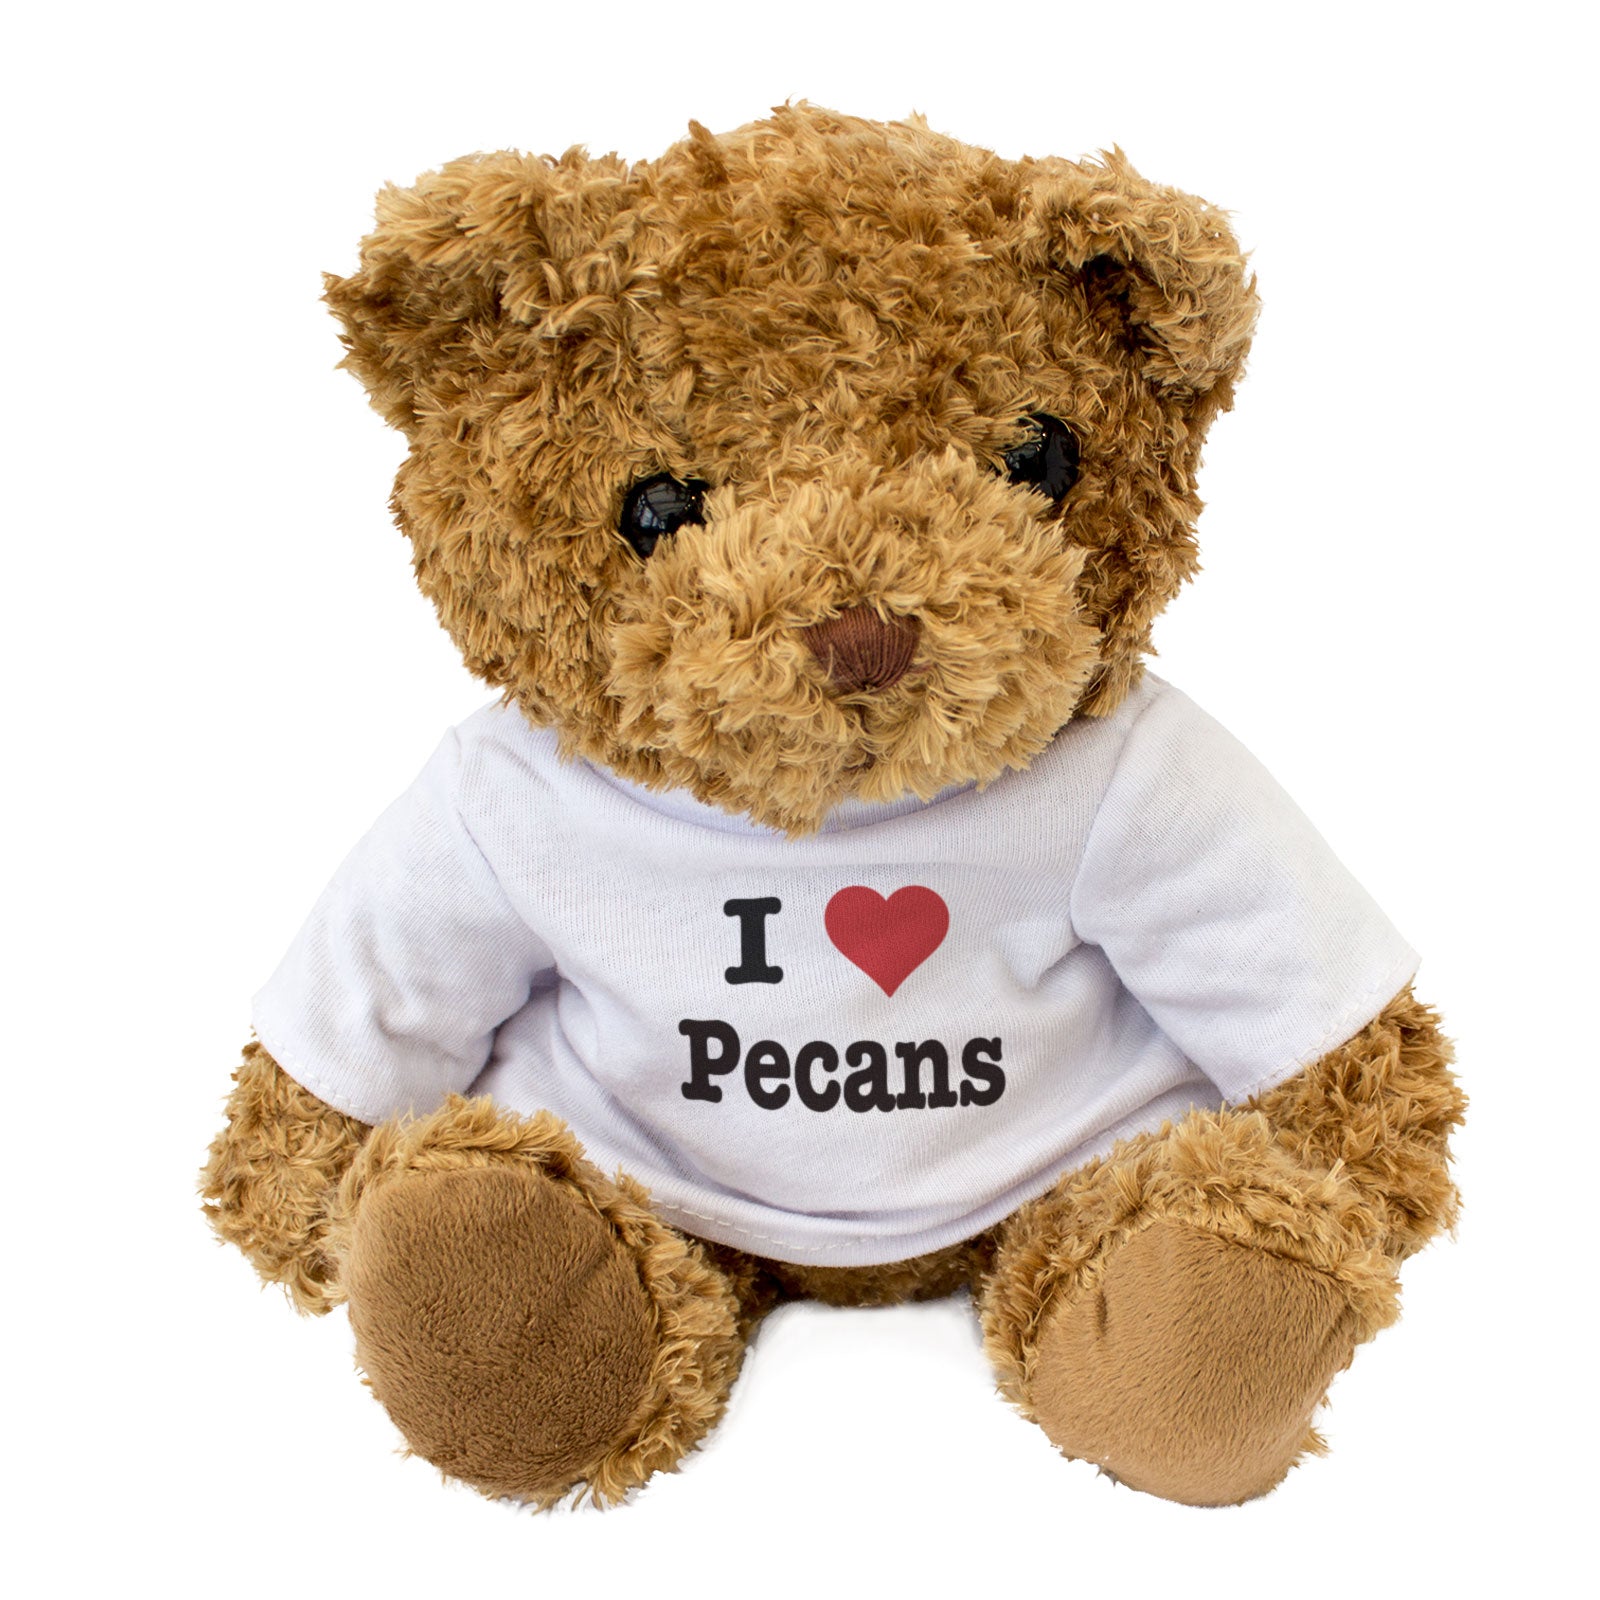 I Love Pecans - Teddy Bear